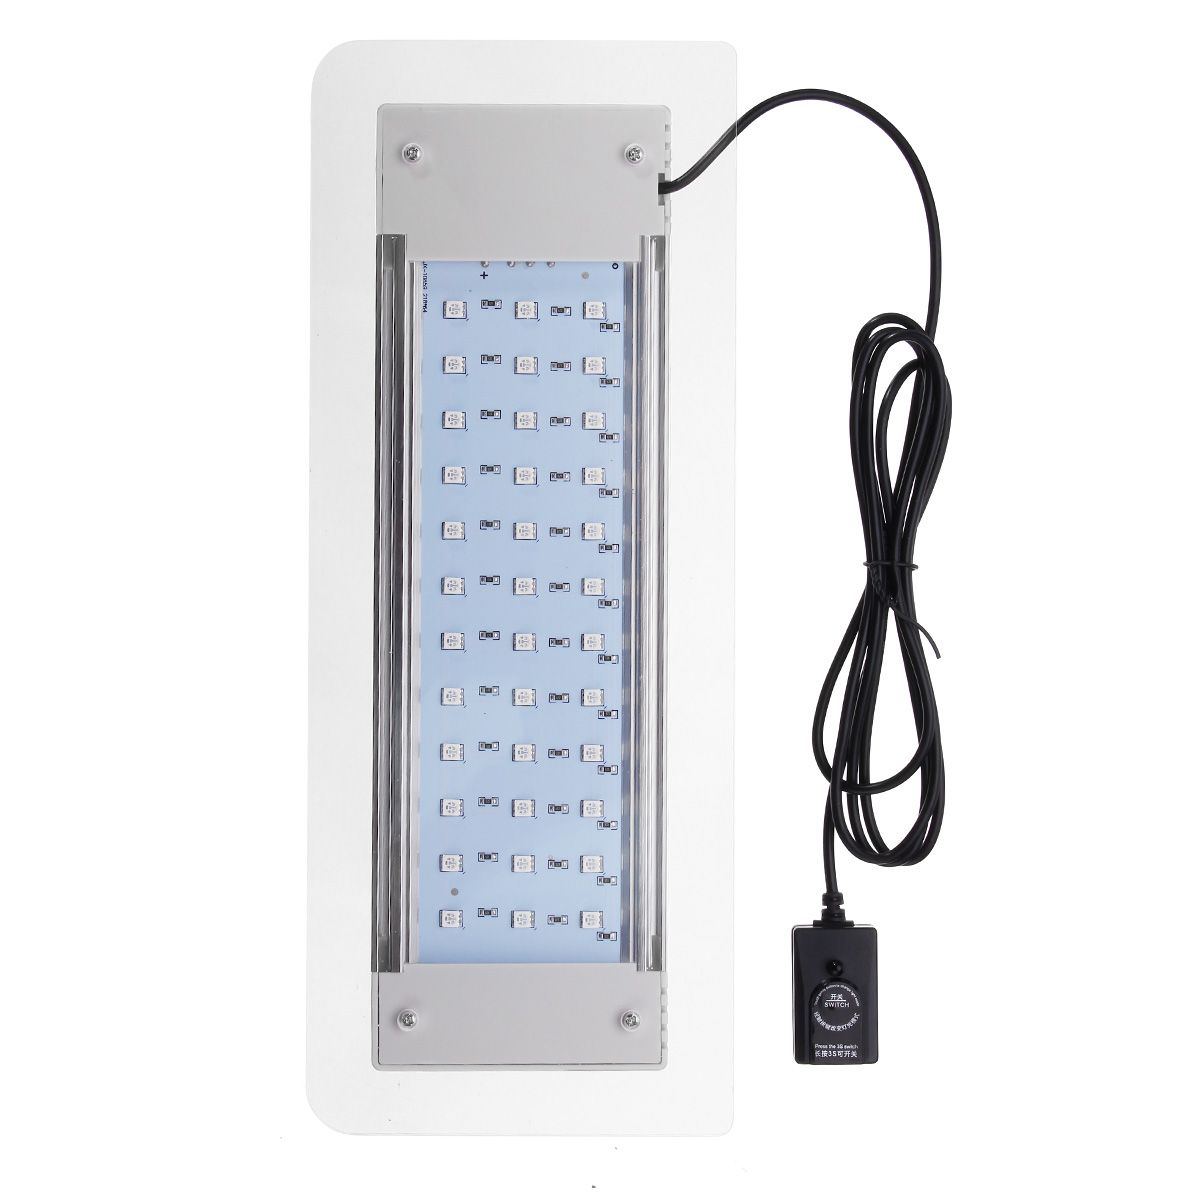 75W-36-LED-RGB-Remote-Control-Aquarium-Light-Lamp-Fit-for-30-52cm-Fish-Tank-1403439